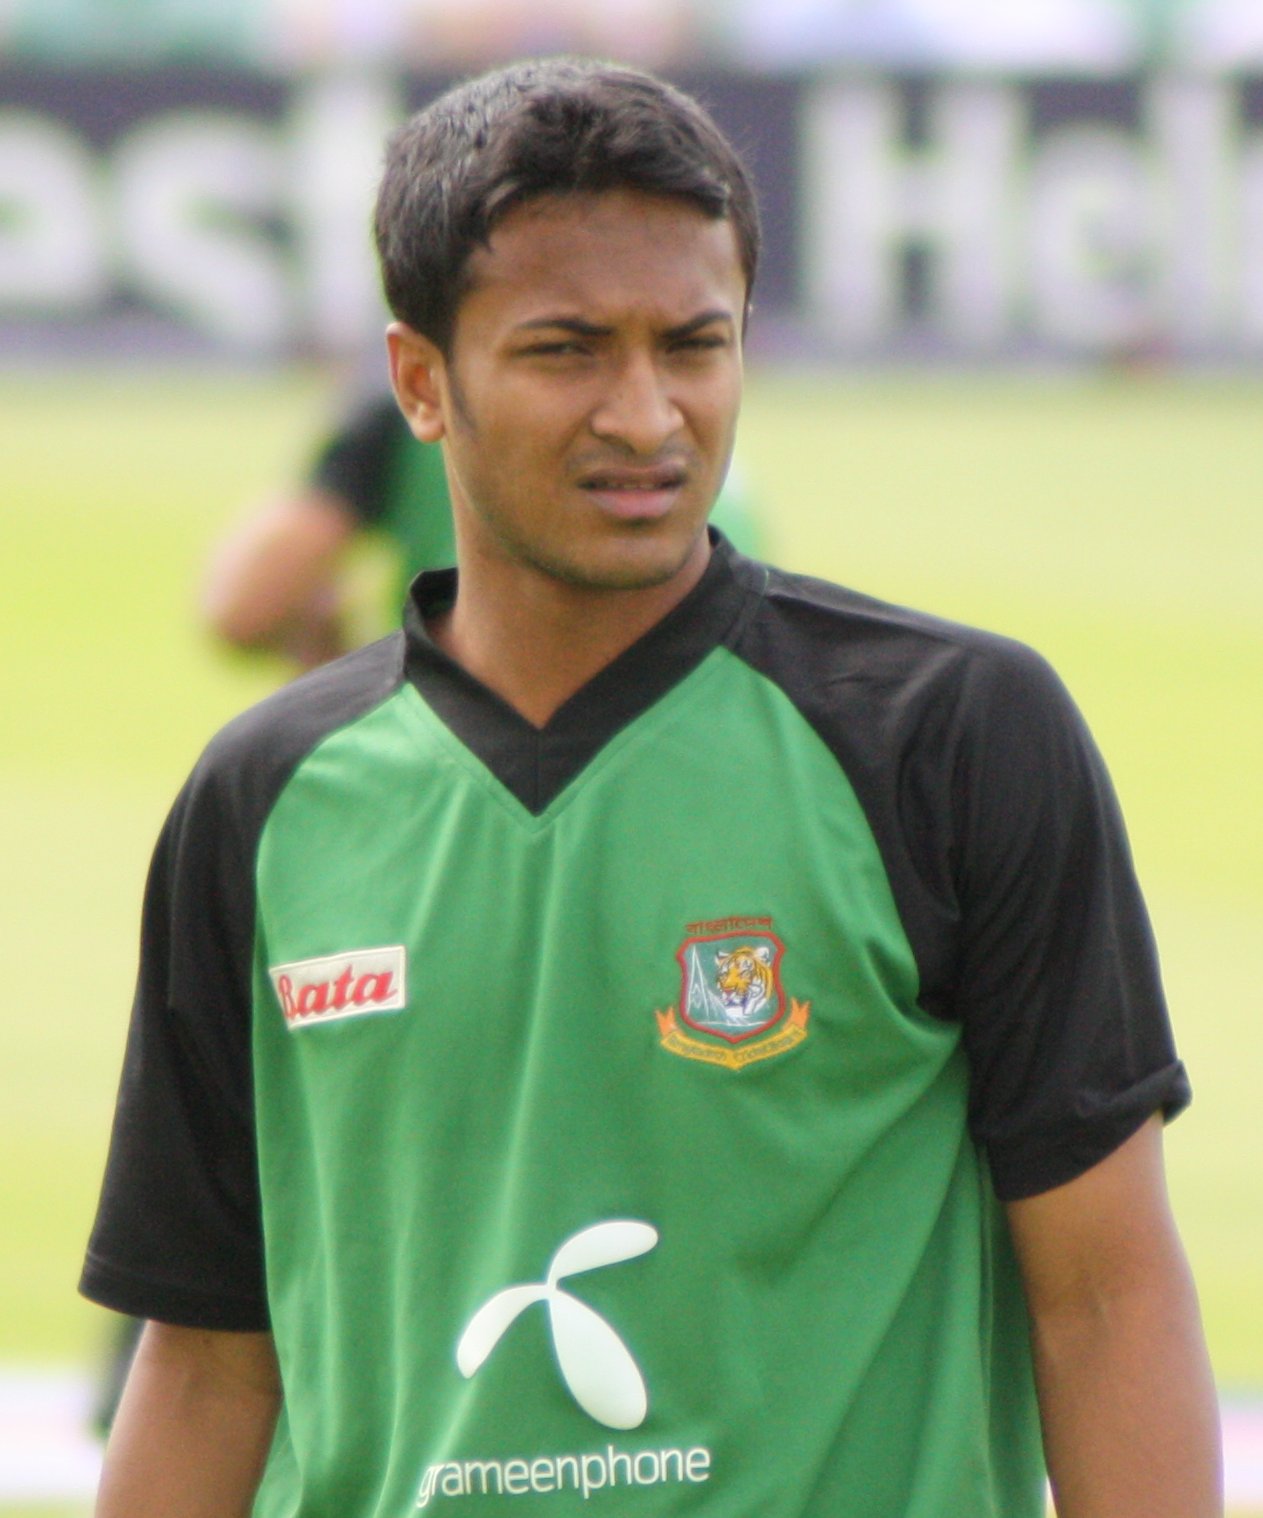 UPDATE 2-Cricket-Bangladesh's Shakib banned for breaching corruption code